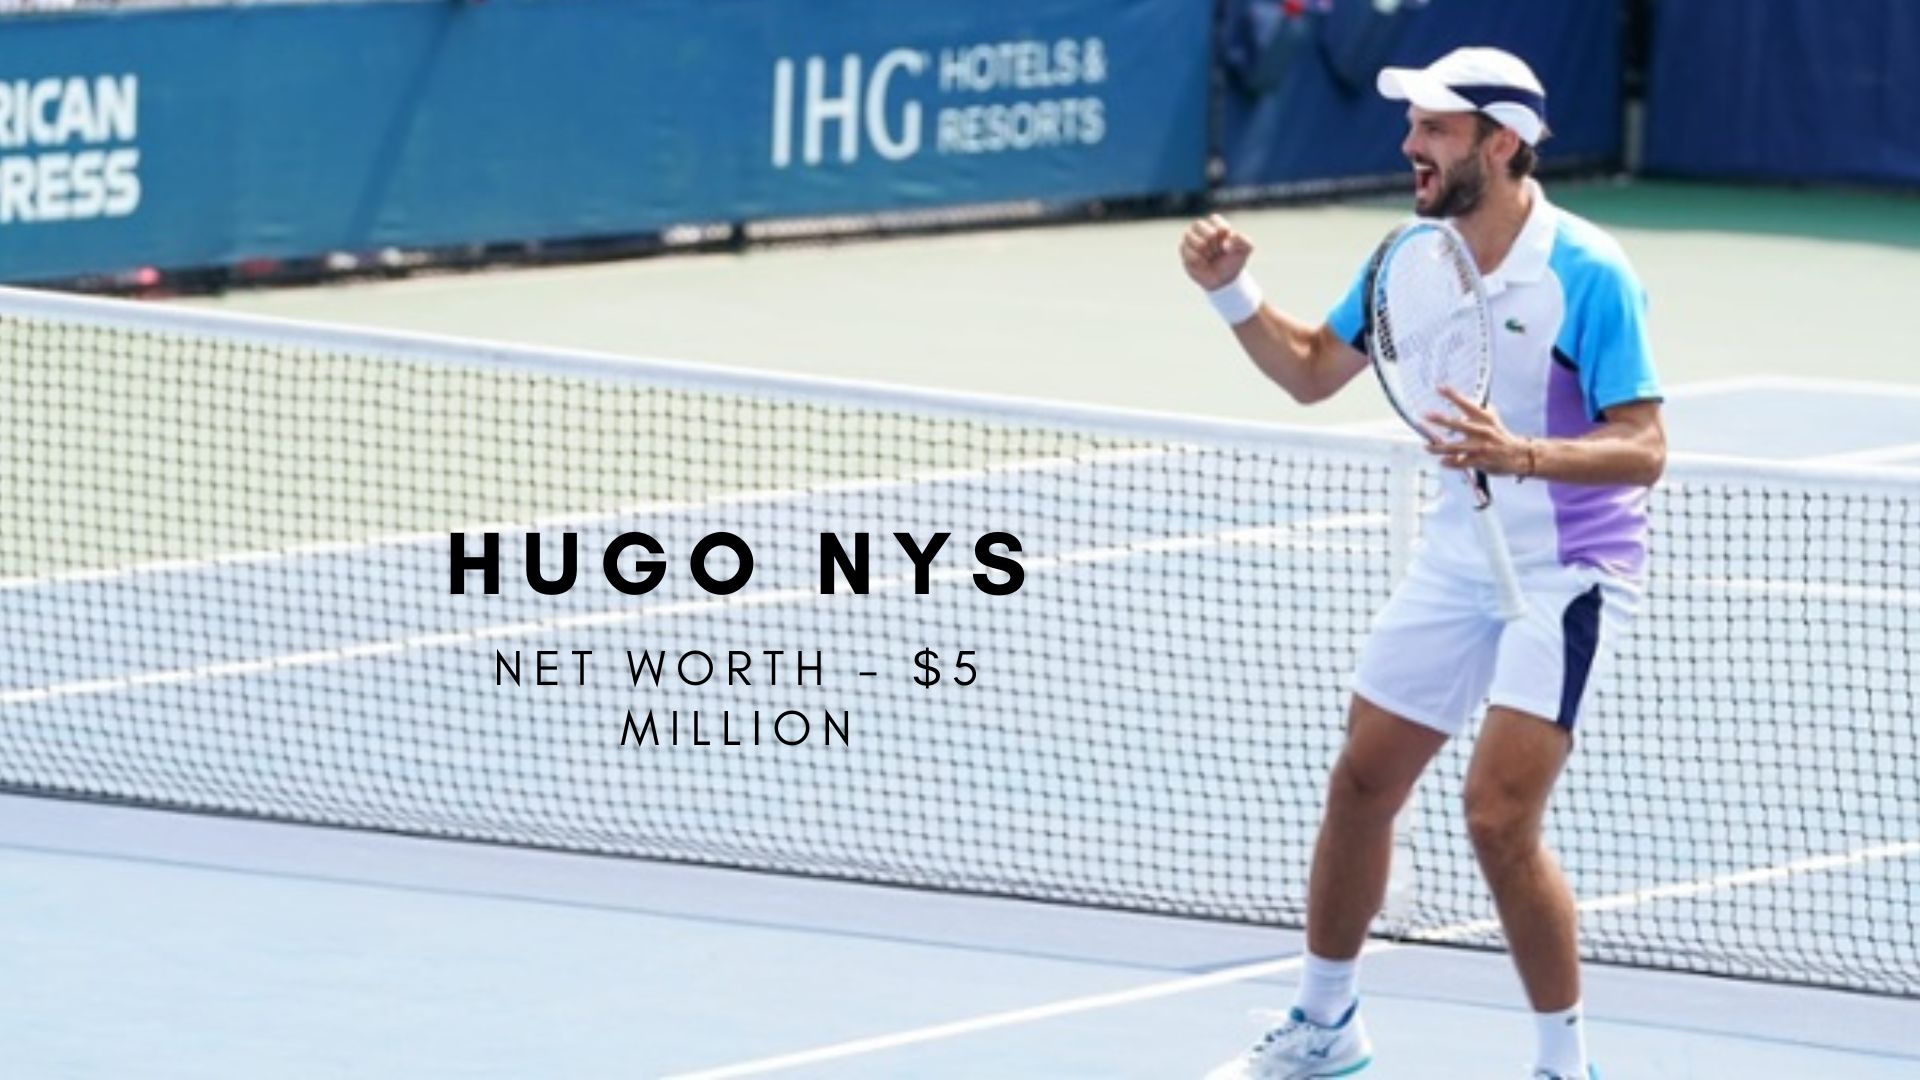 Hugo Nys net worth